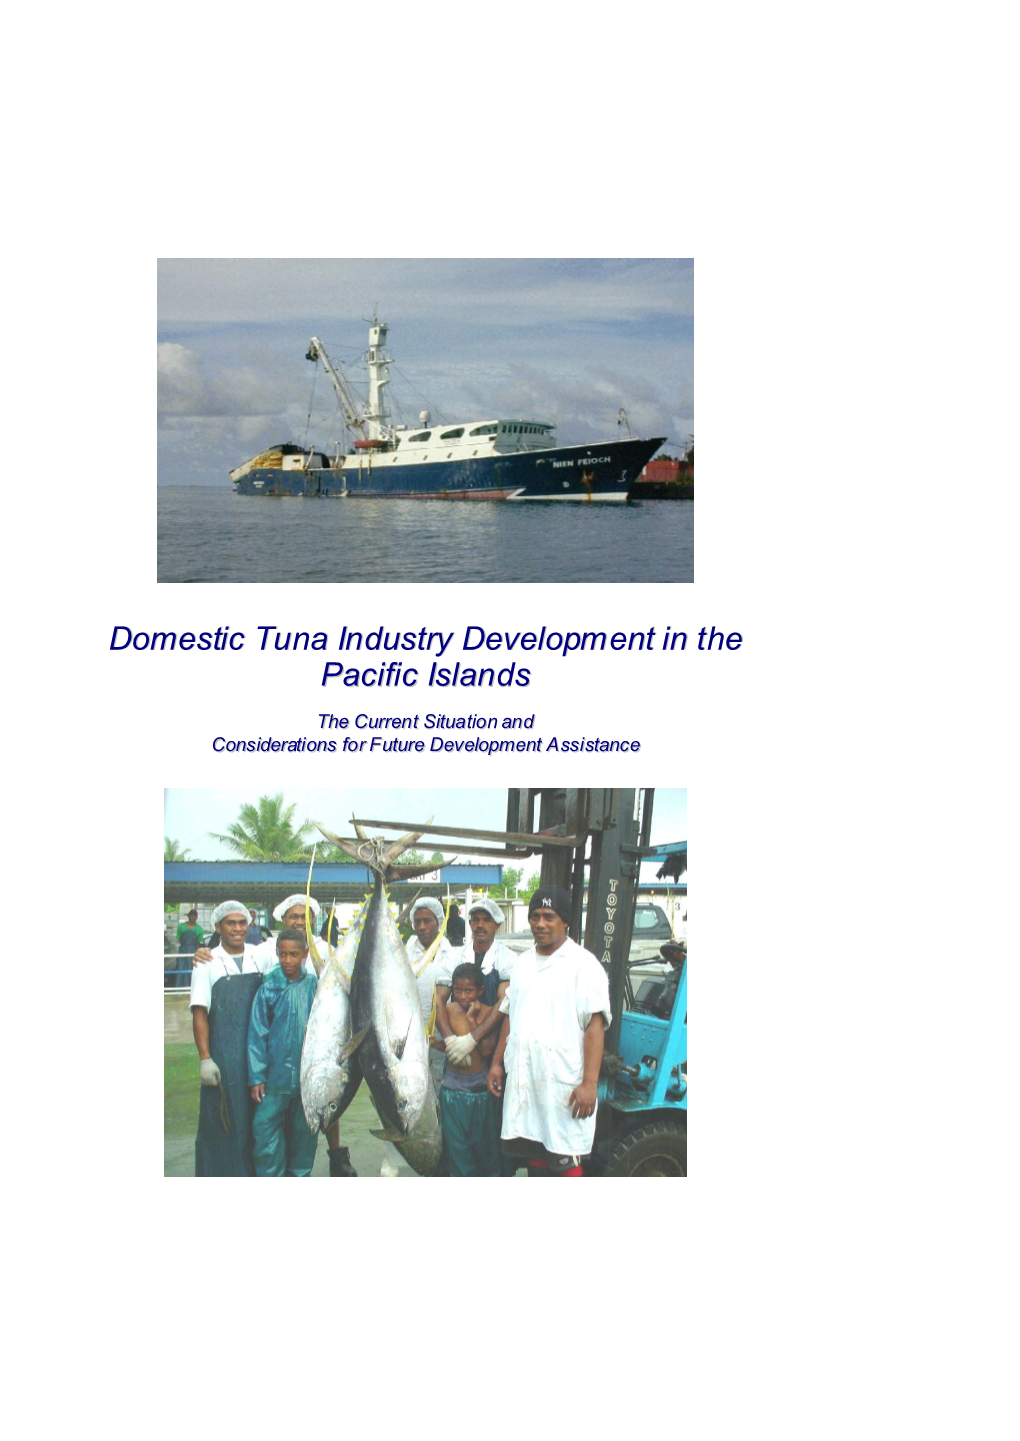 Domestic Tuna Industry Development in the Pacific Islands